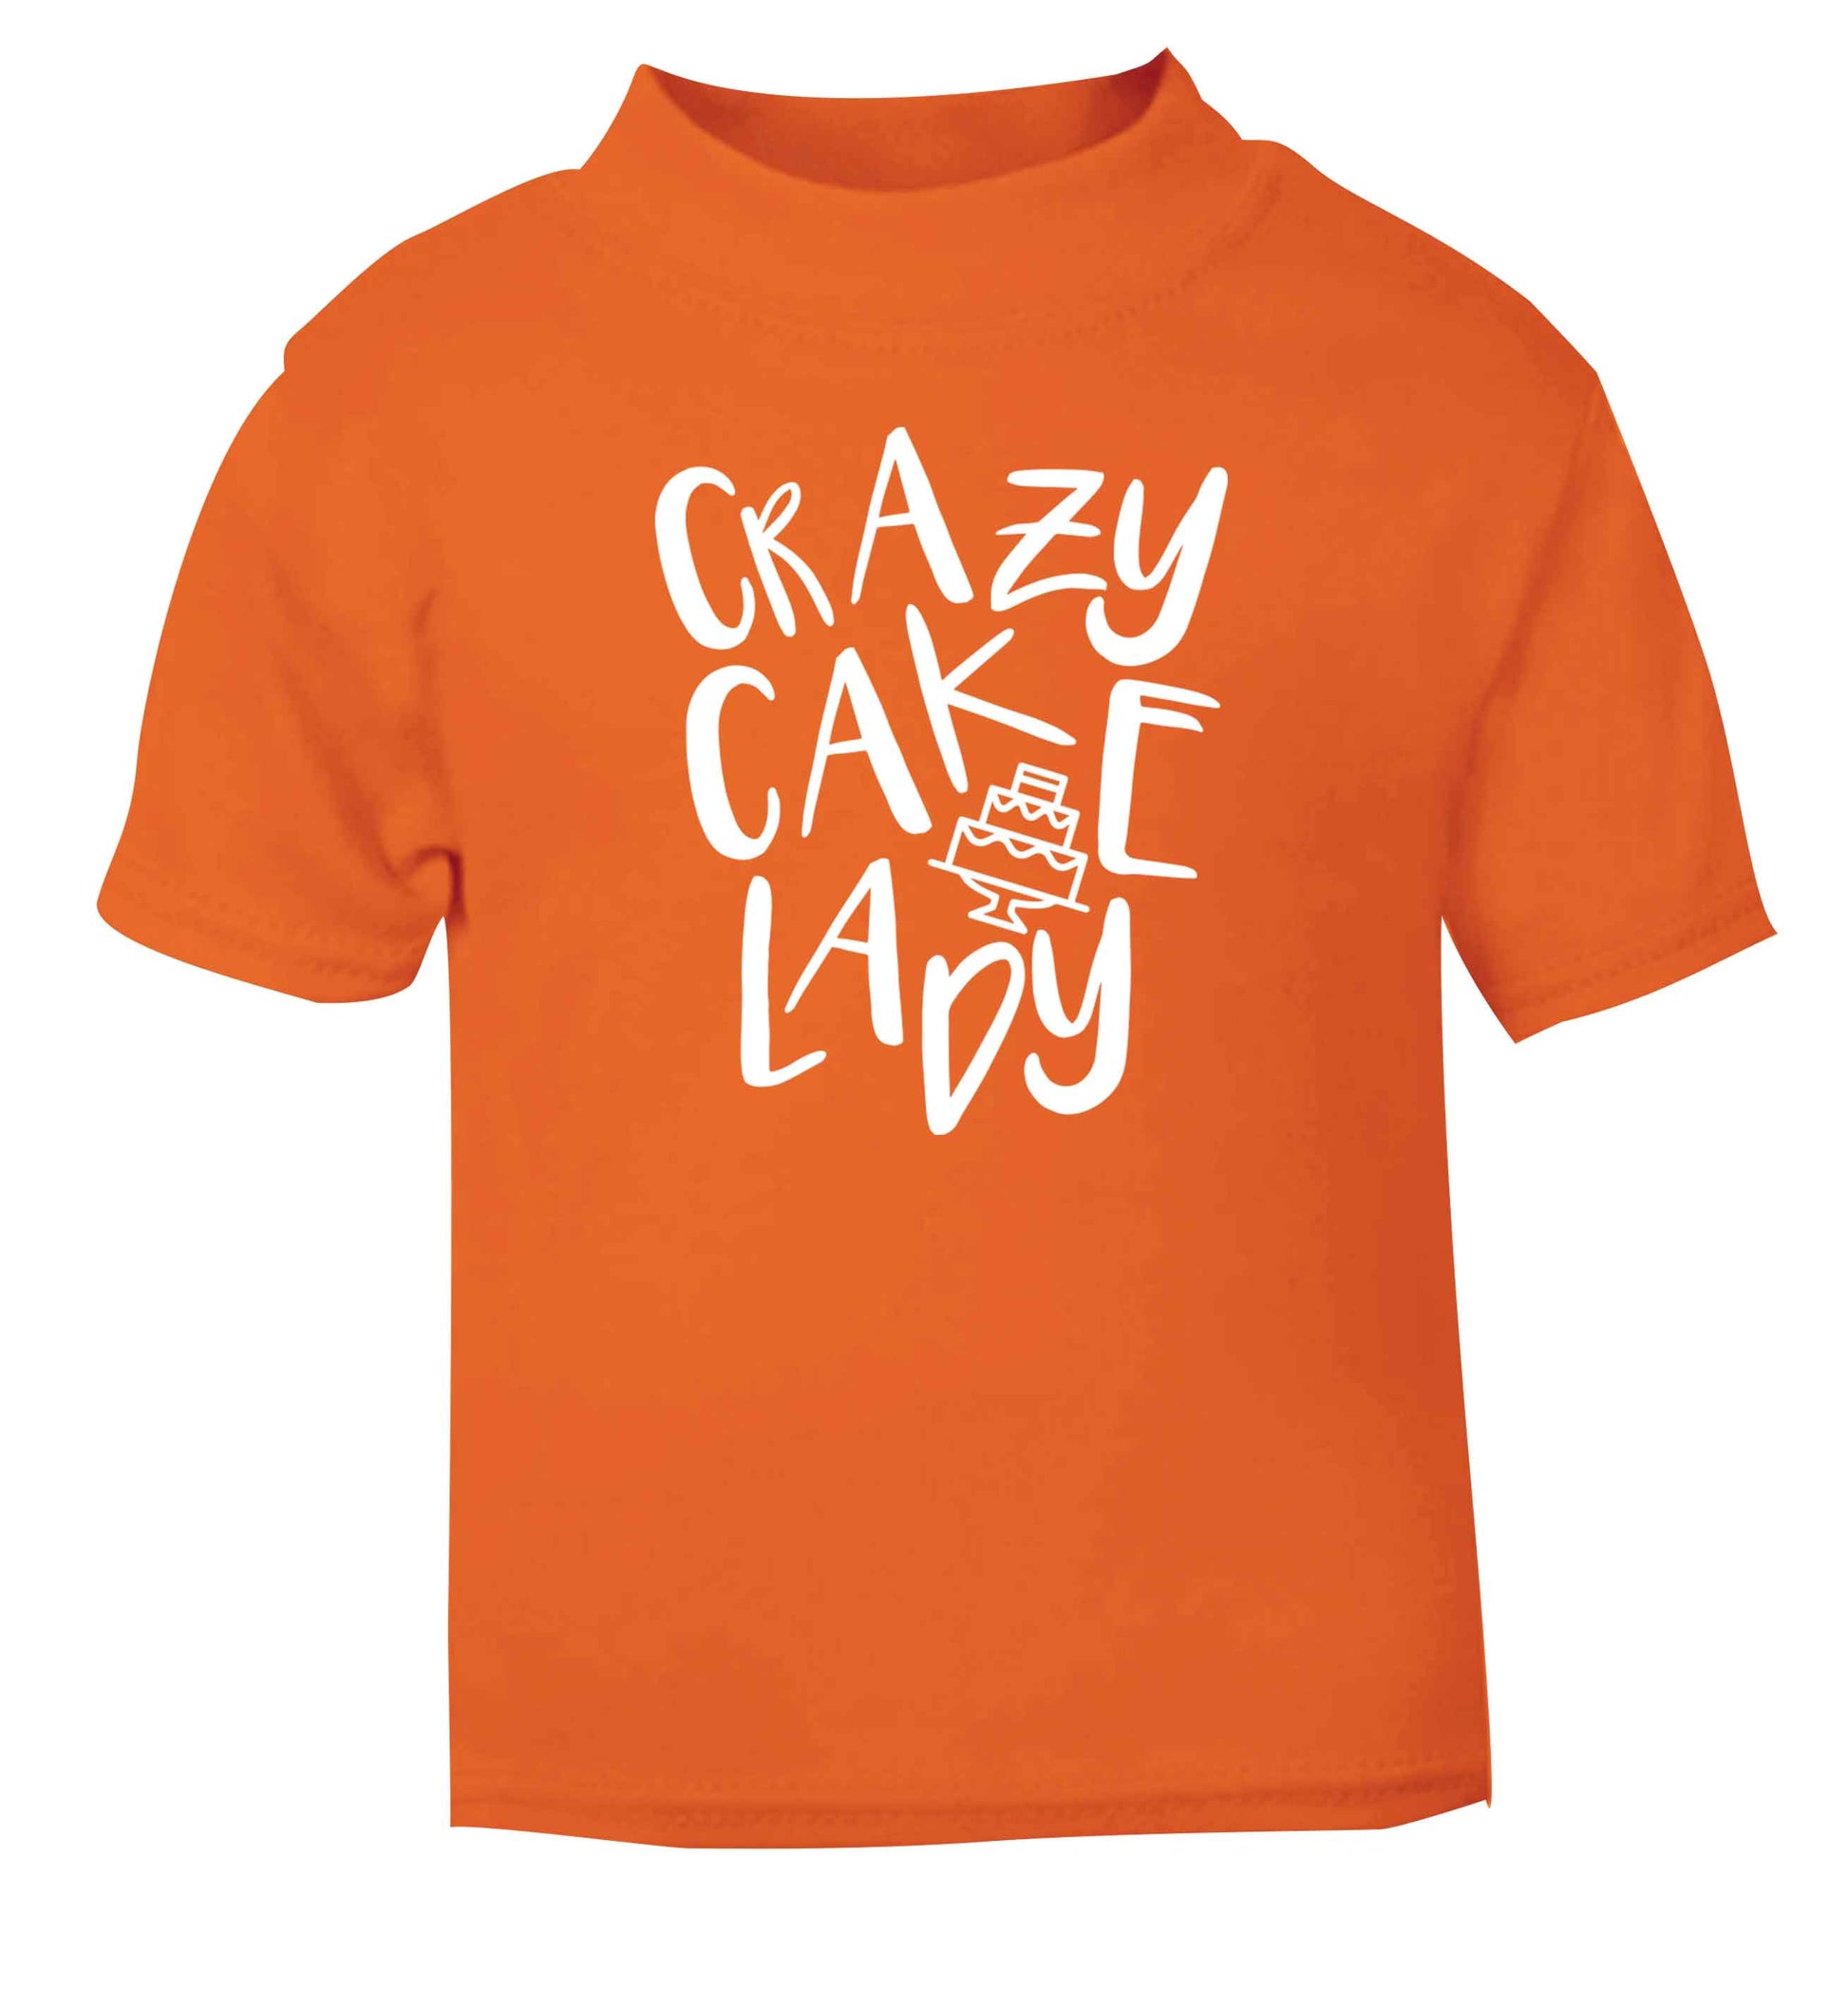 Crazy cake lady orange Baby Toddler Tshirt 2 Years